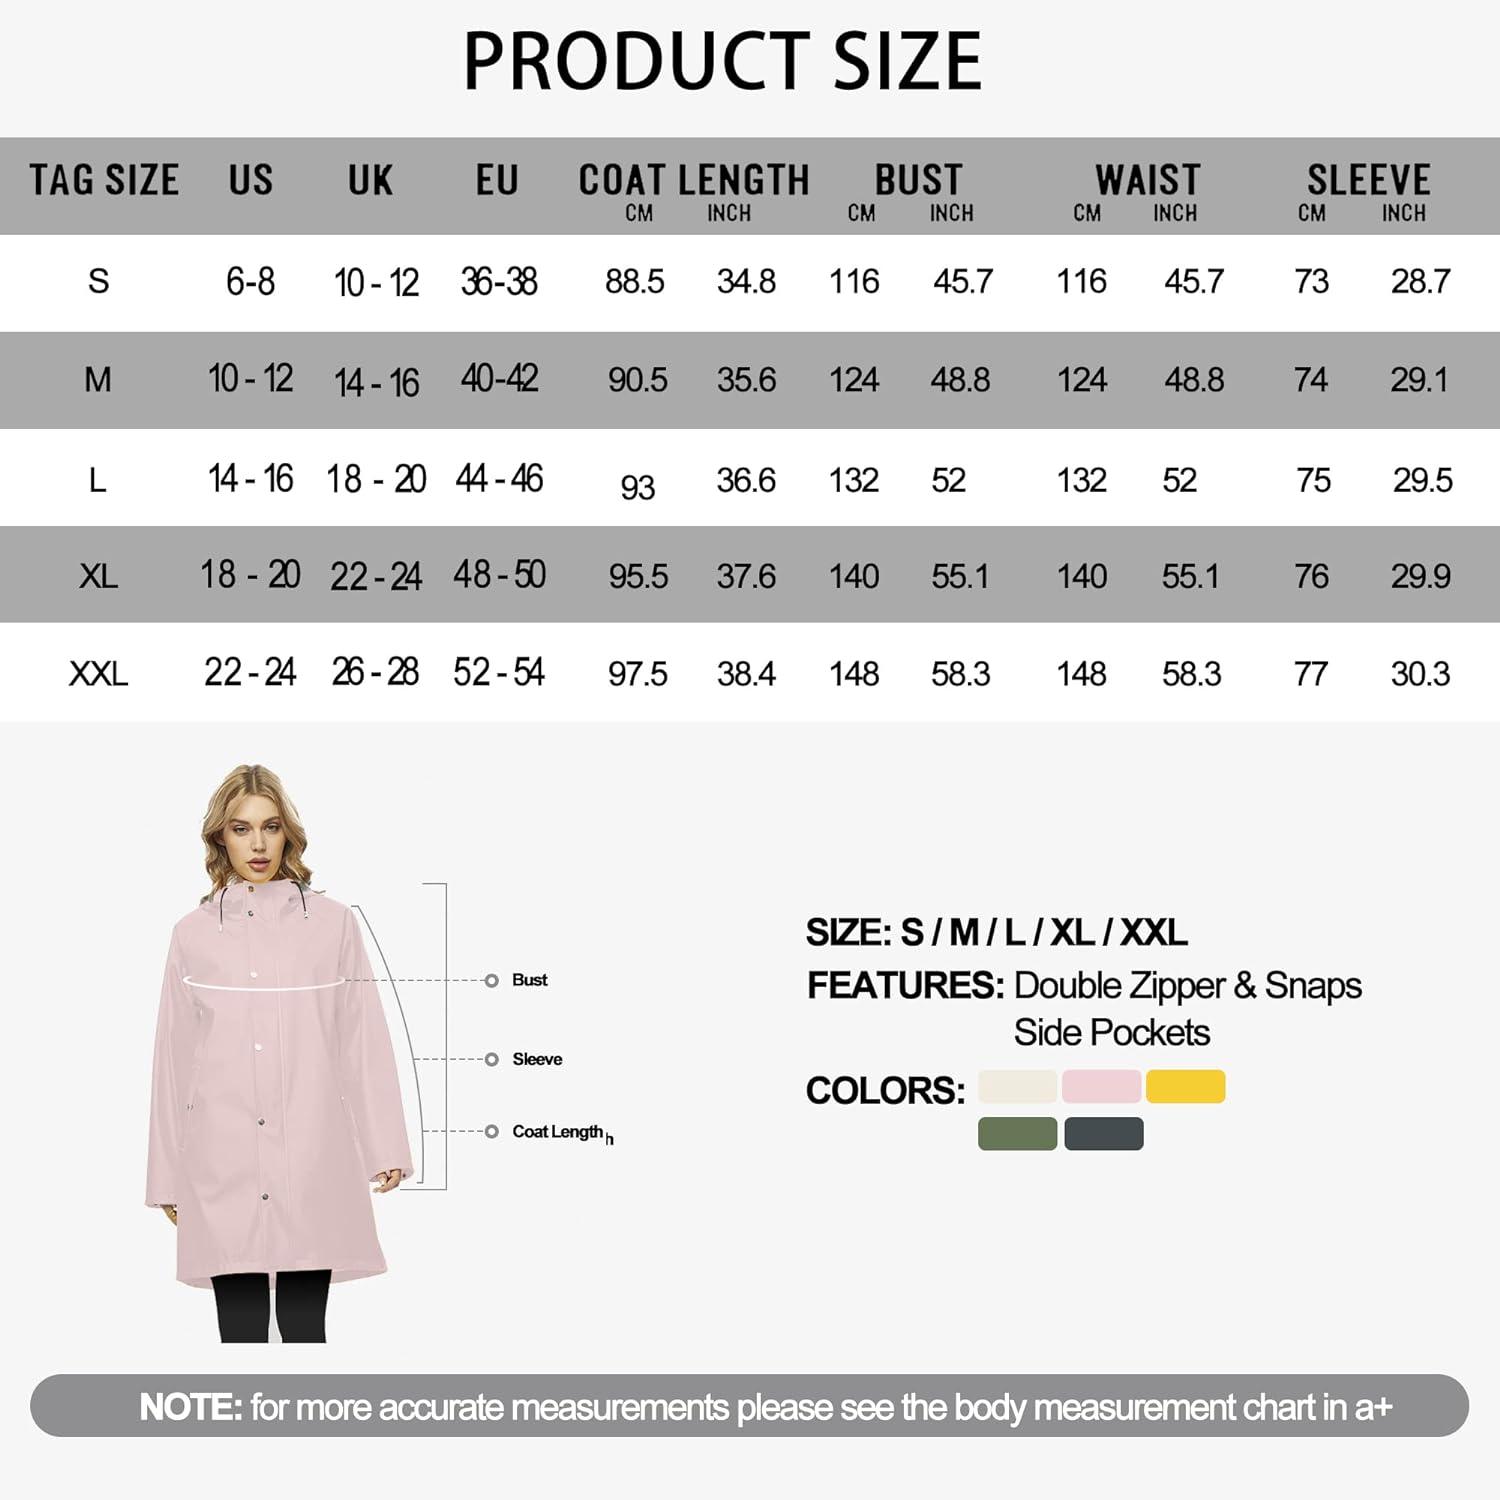 Raincoat for Women Pink With Fleece UNIQUEBELLA Windbreaker Size M - Massive Discounts